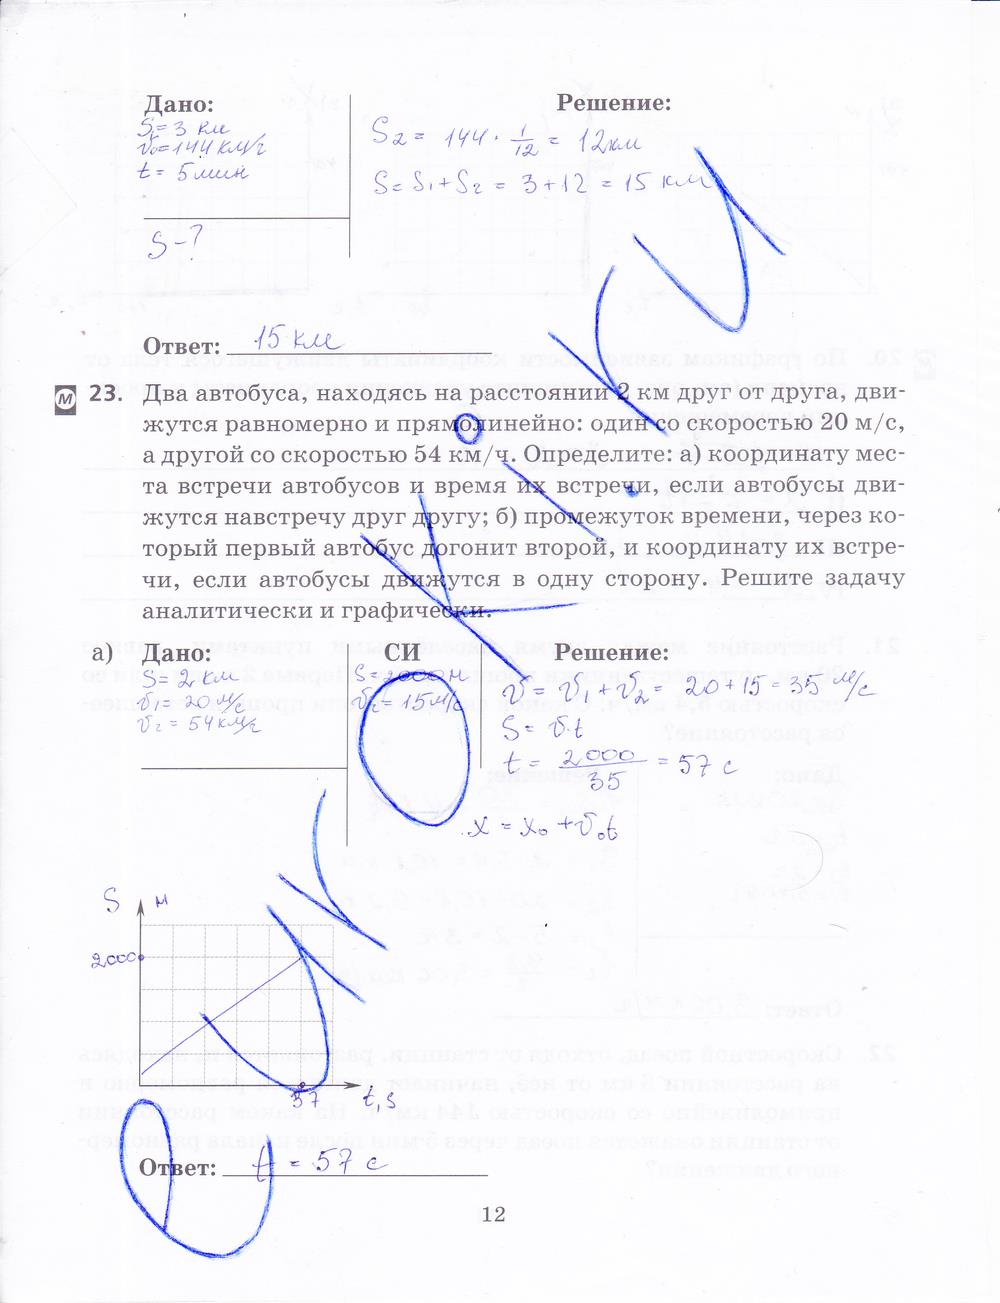 гдз 9 класс рабочая тетрадь страница 12 физика Пурышева, Важеевская, Чаругин